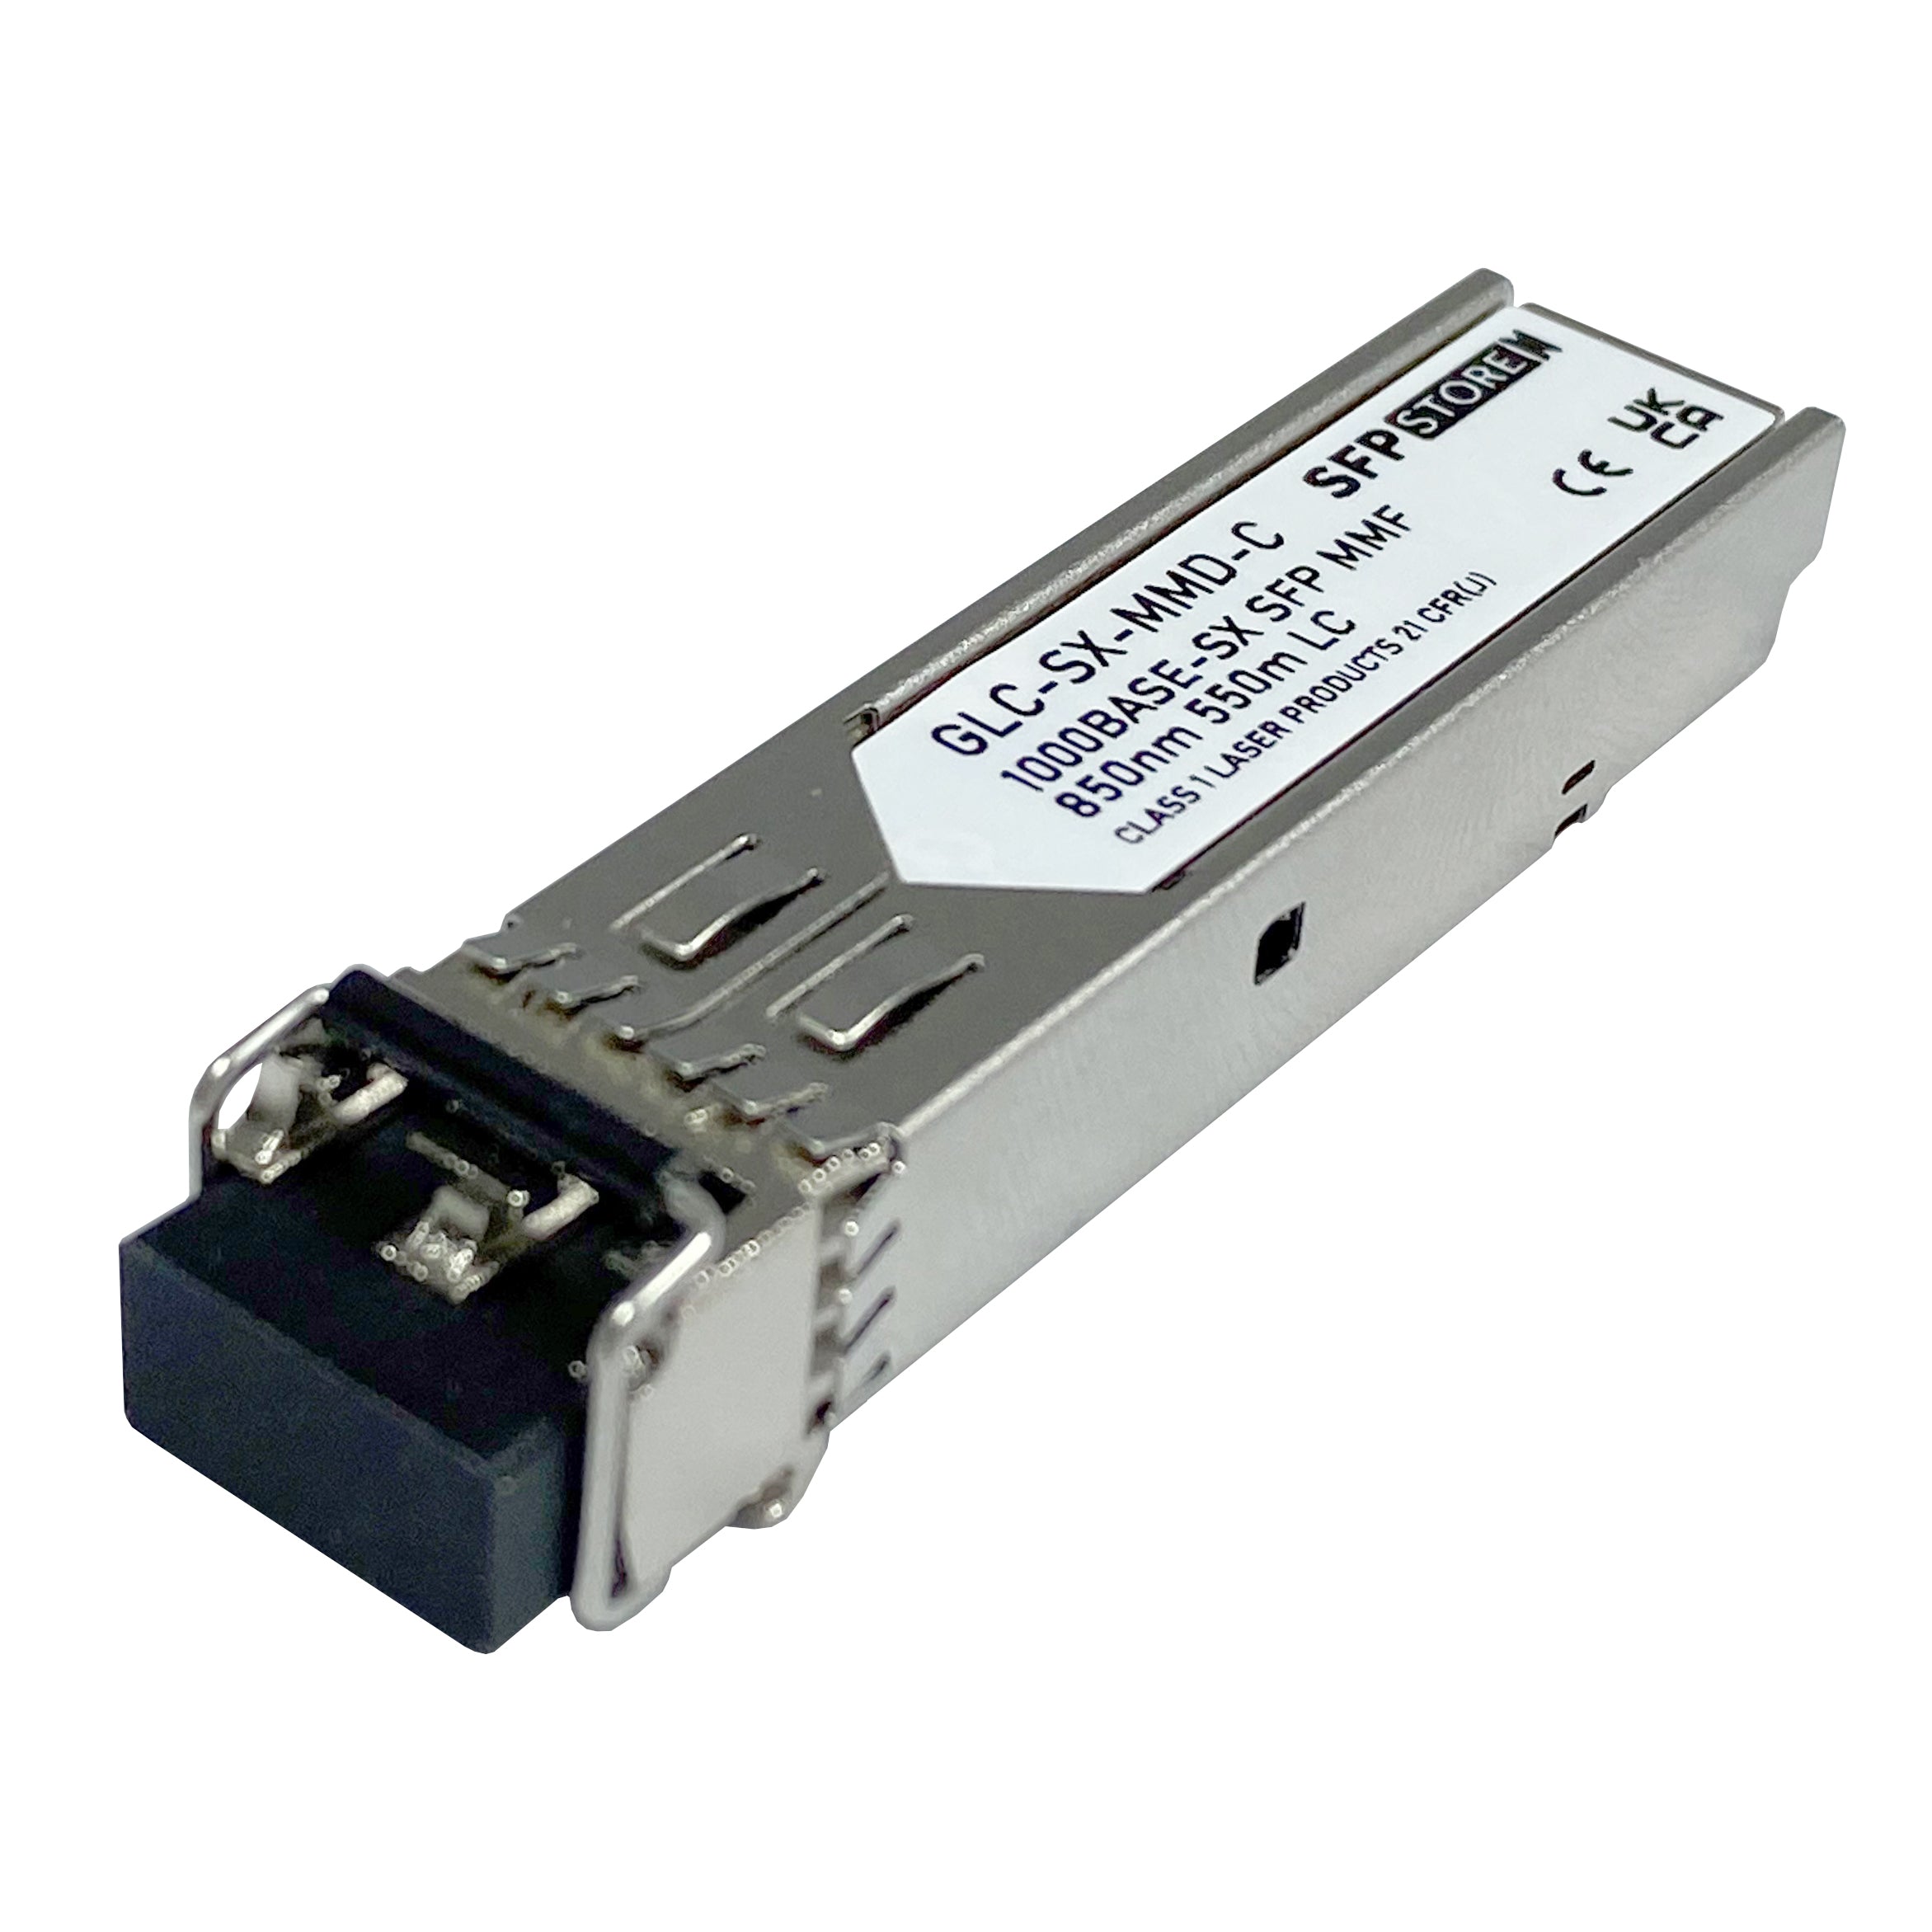 1100-0144-C Westermo Compatible 1G SX SFP LC Transceiver